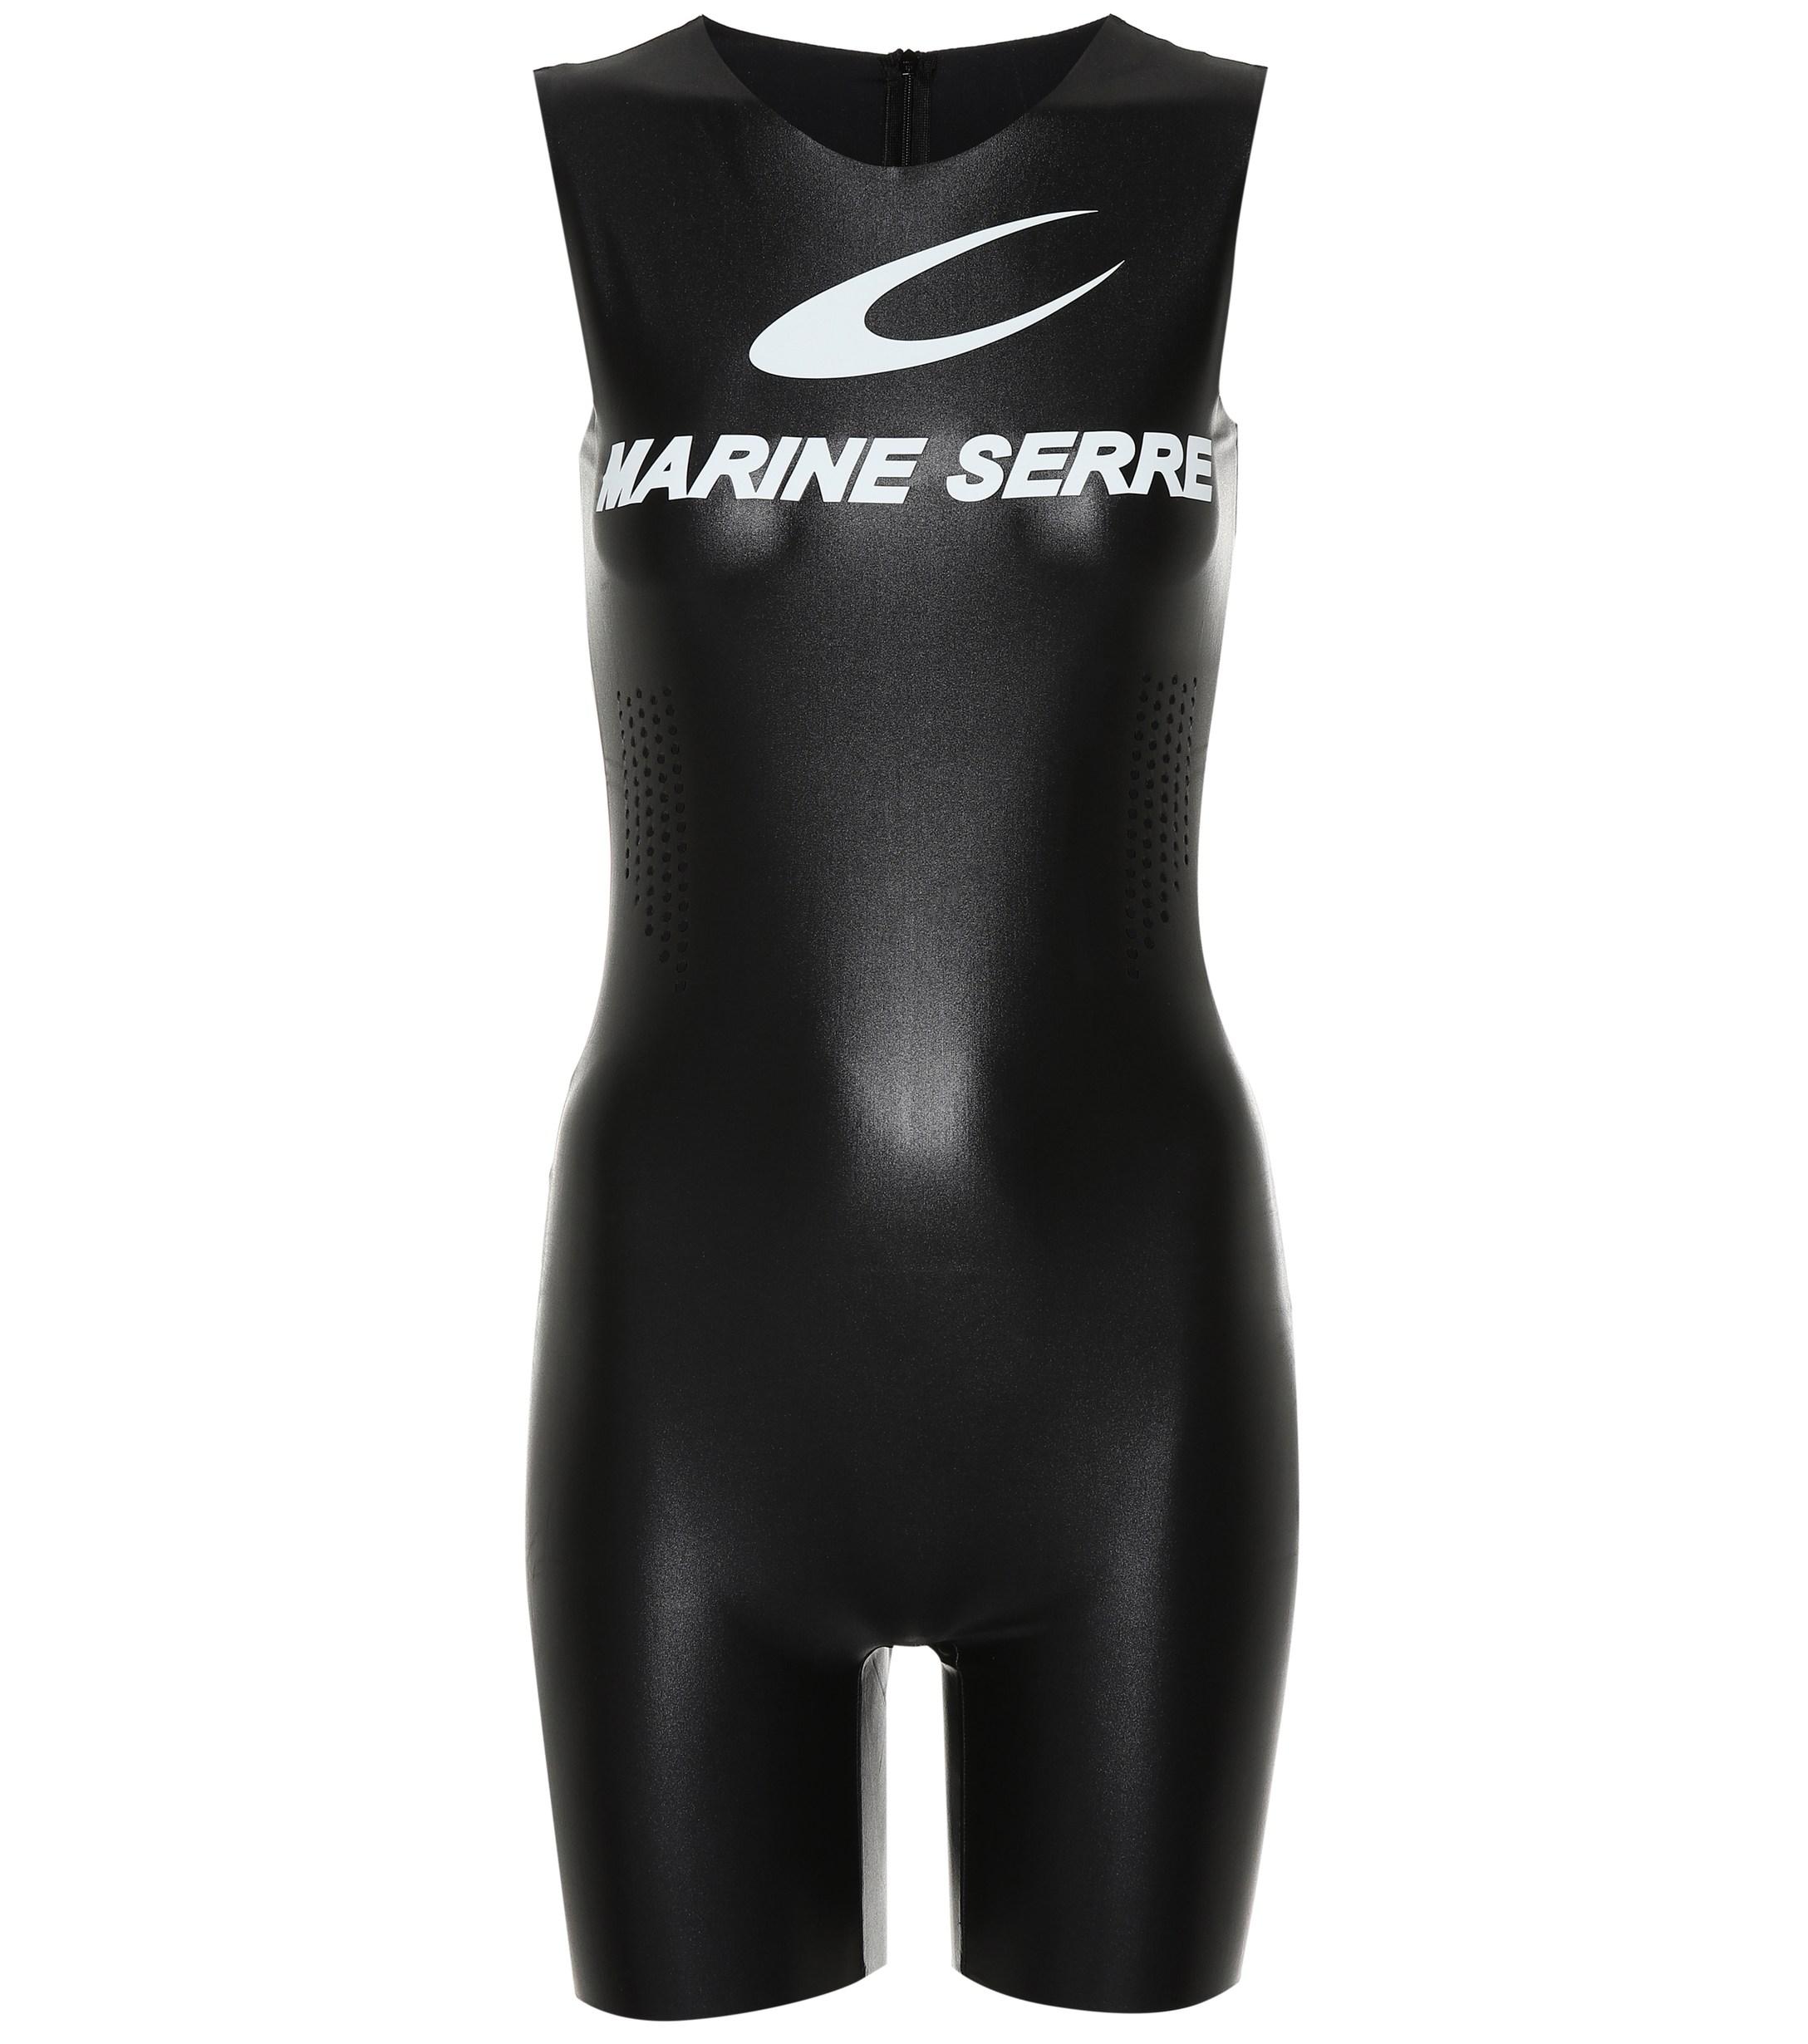 Marine Serre Perforated Logo Bodysuit in Black - Lyst